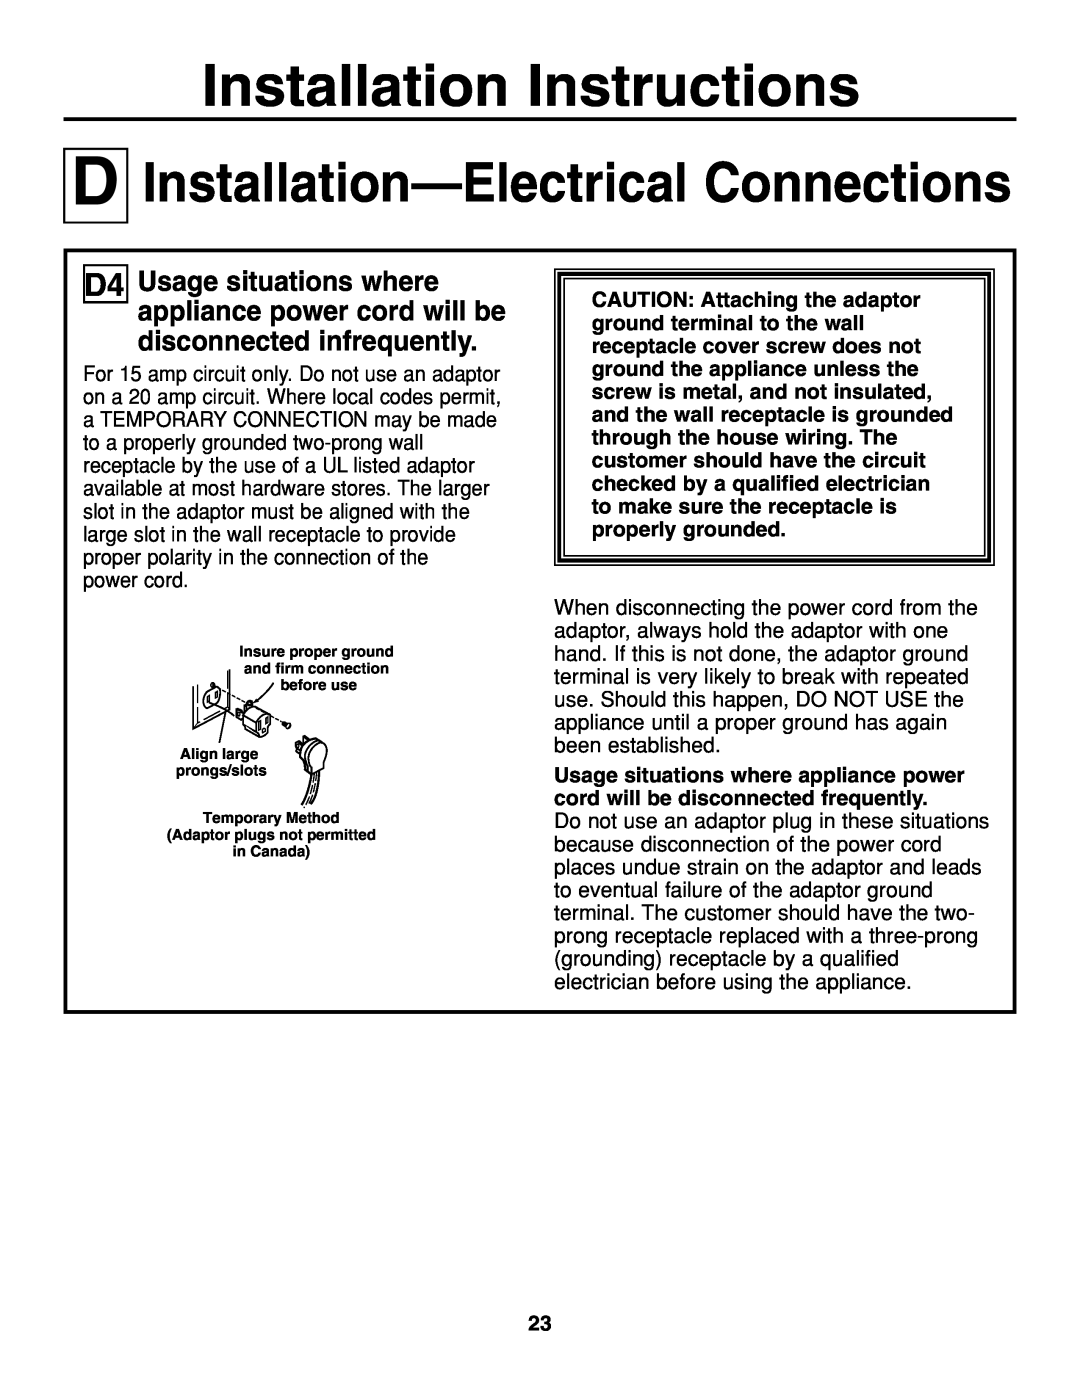 GE JGP637 installation instructions Installation Instructions, Installation-Electrical Connections, in Canada 